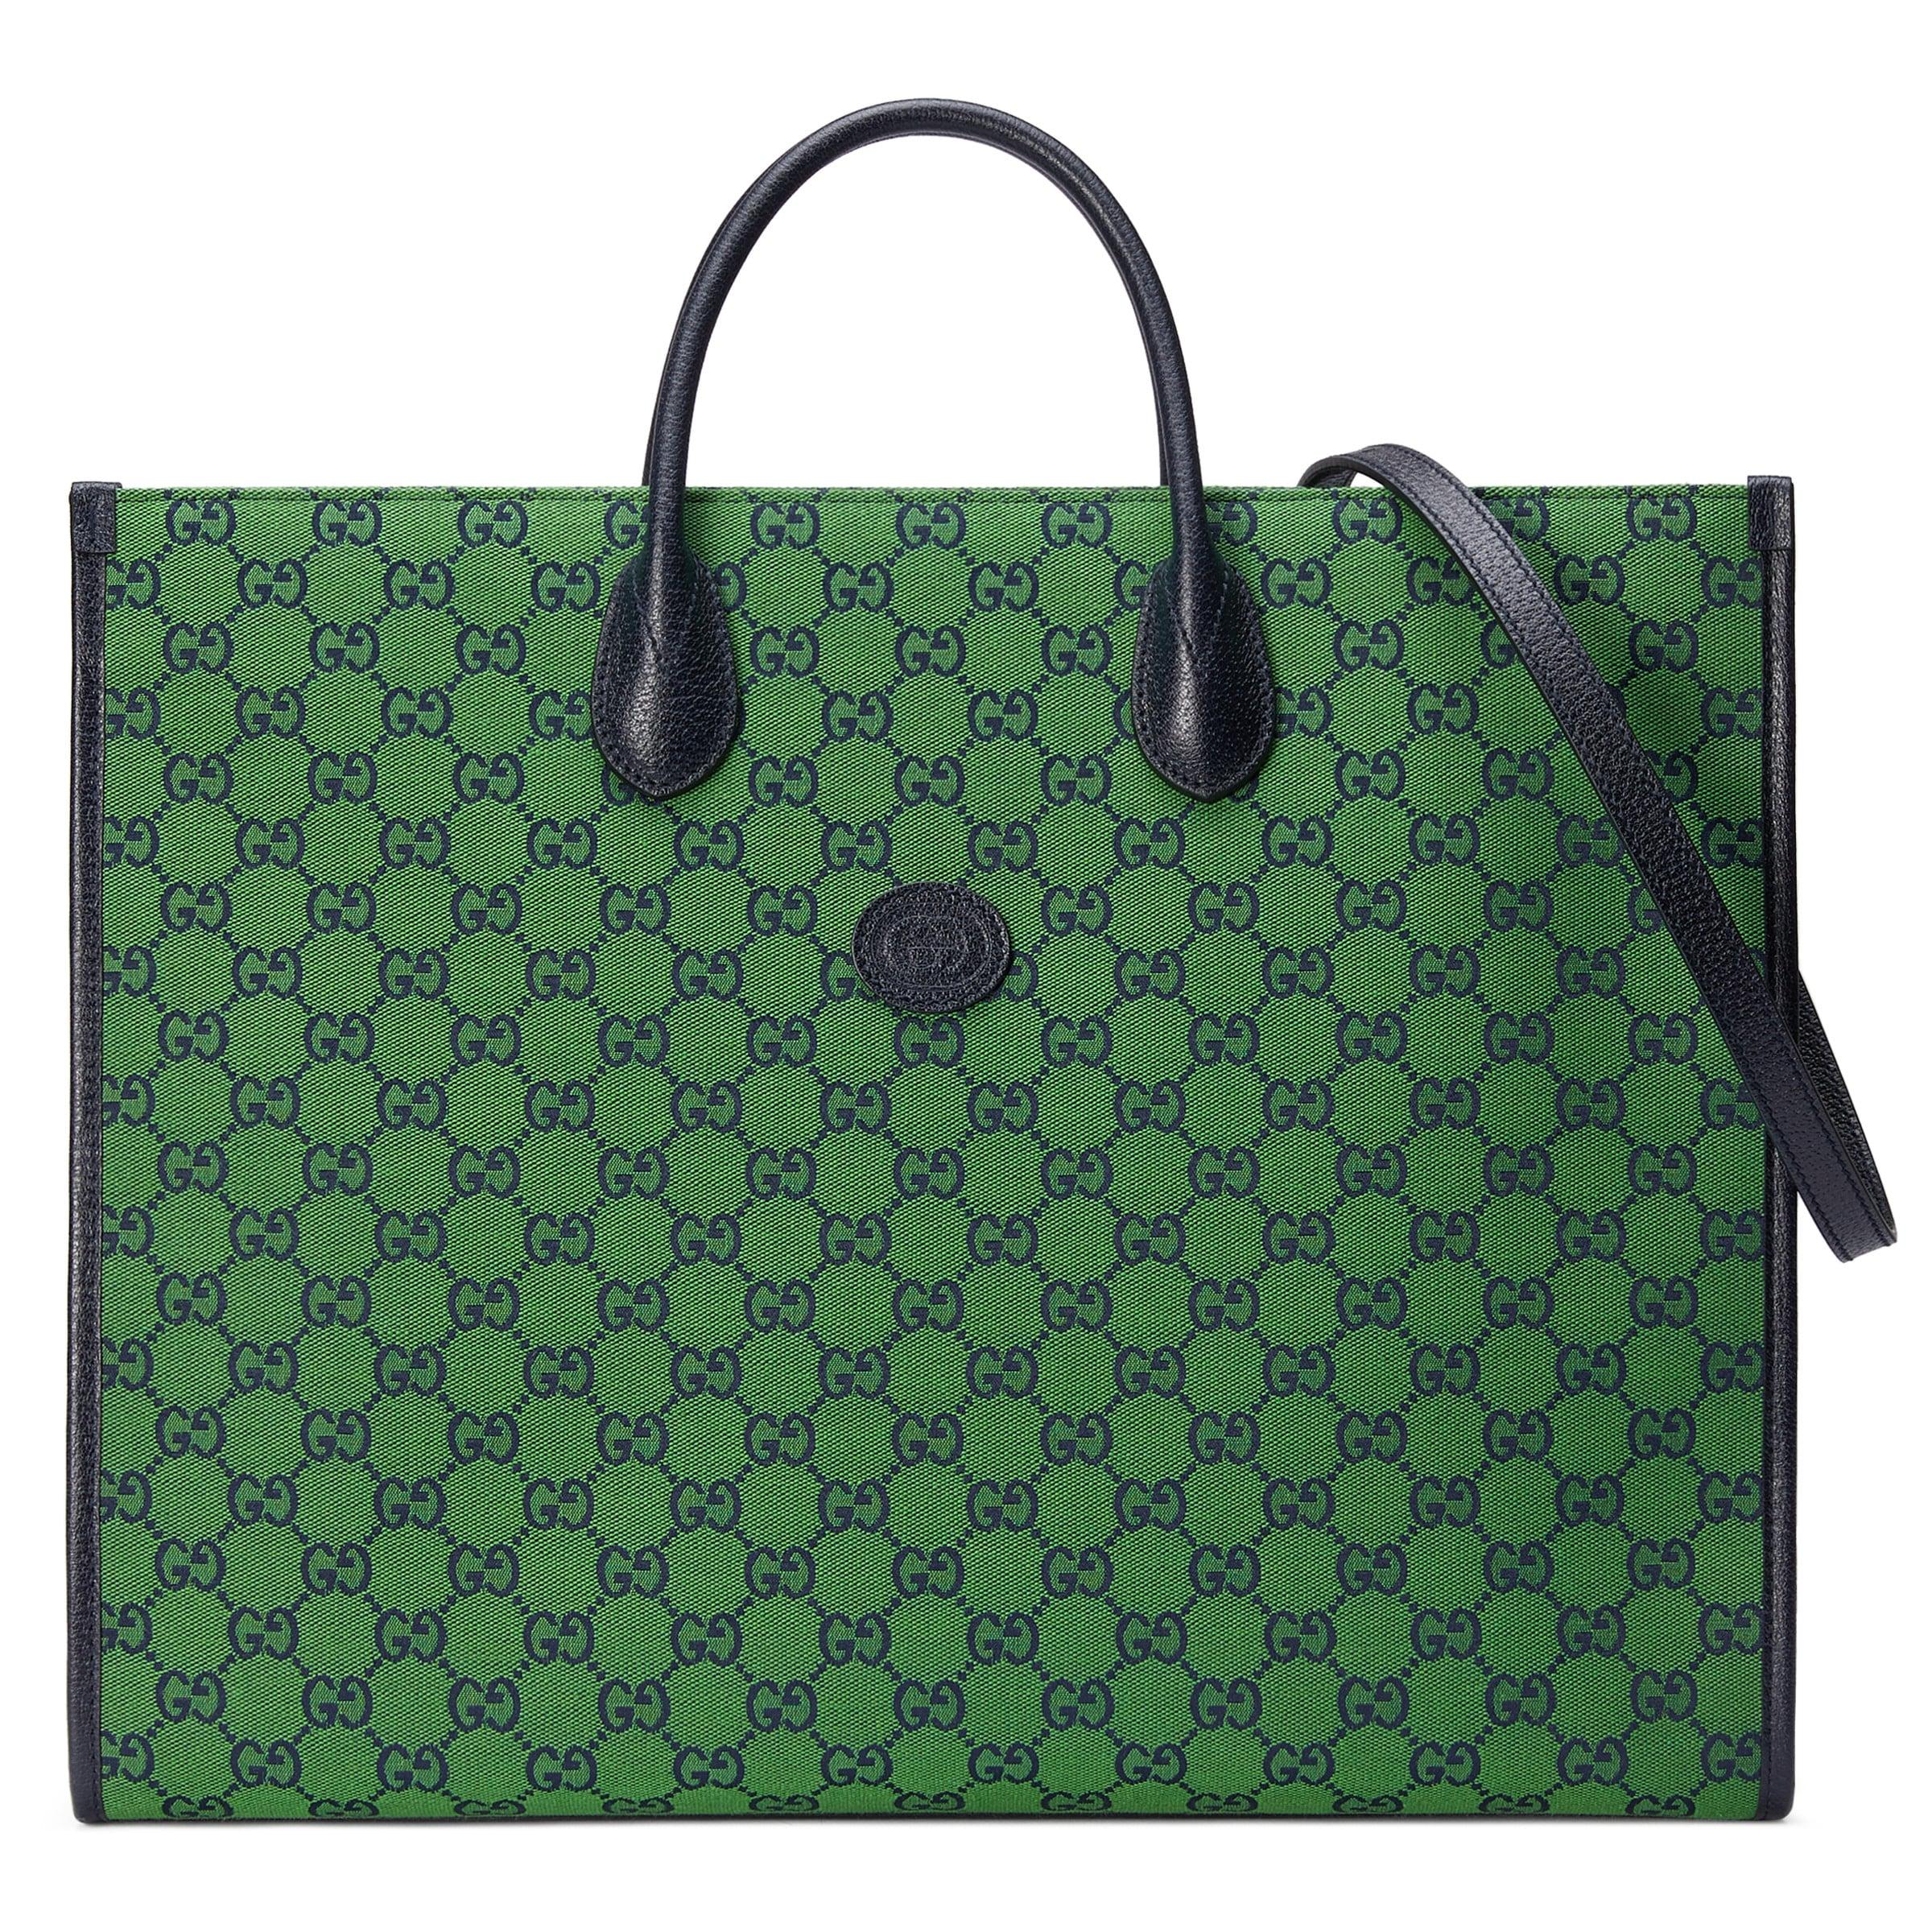 Gucci GG Multicolour Large Tote Bag in Green for Men | Lyst Australia